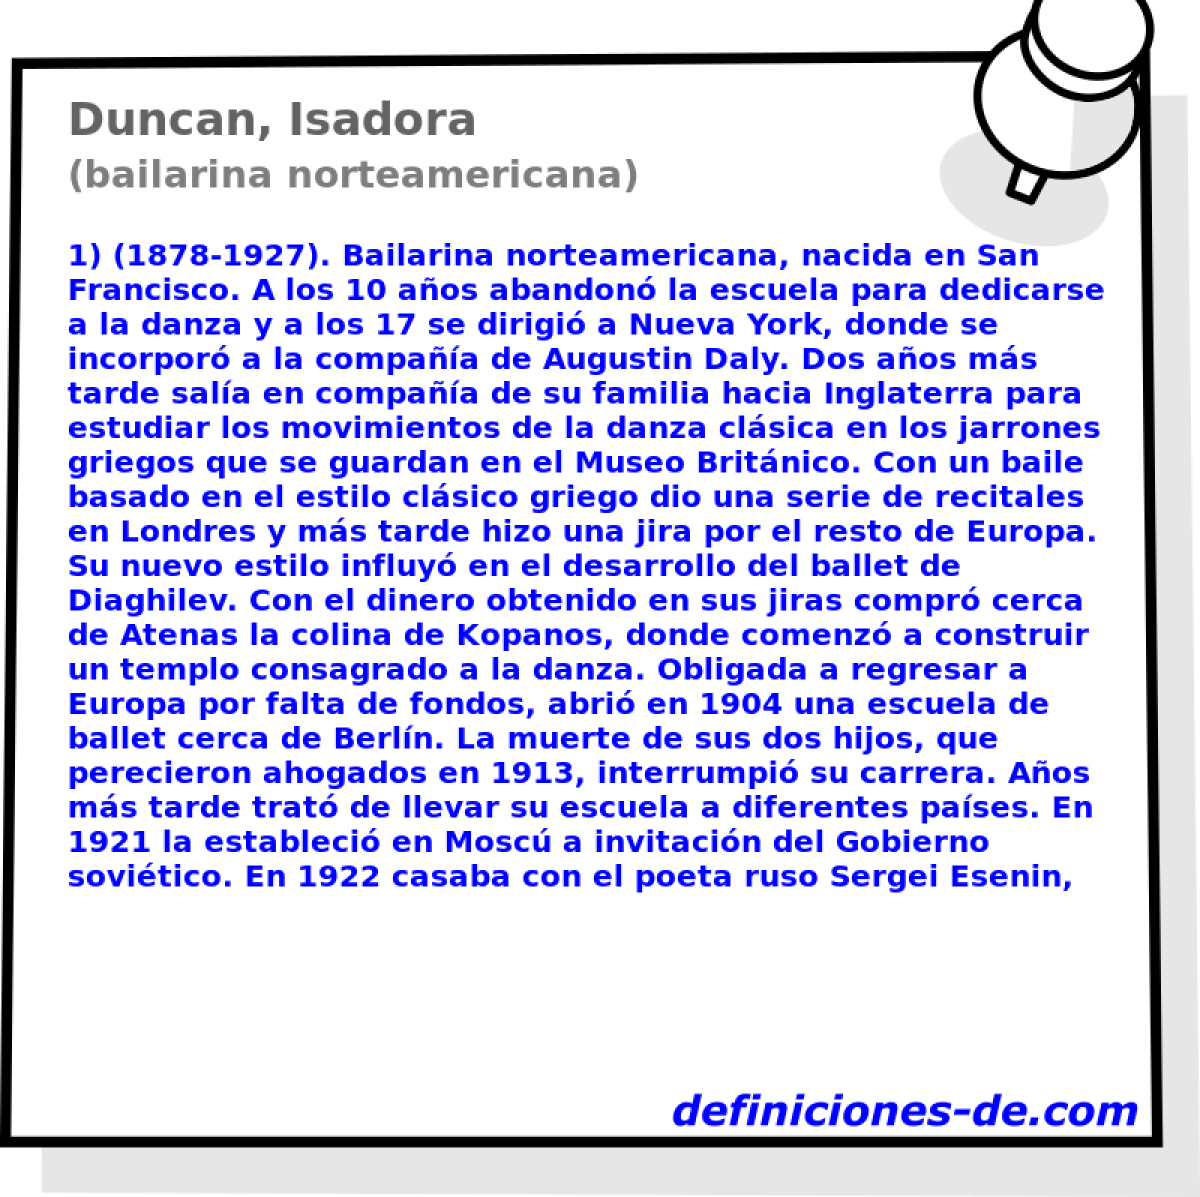 Duncan, Isadora (bailarina norteamericana)